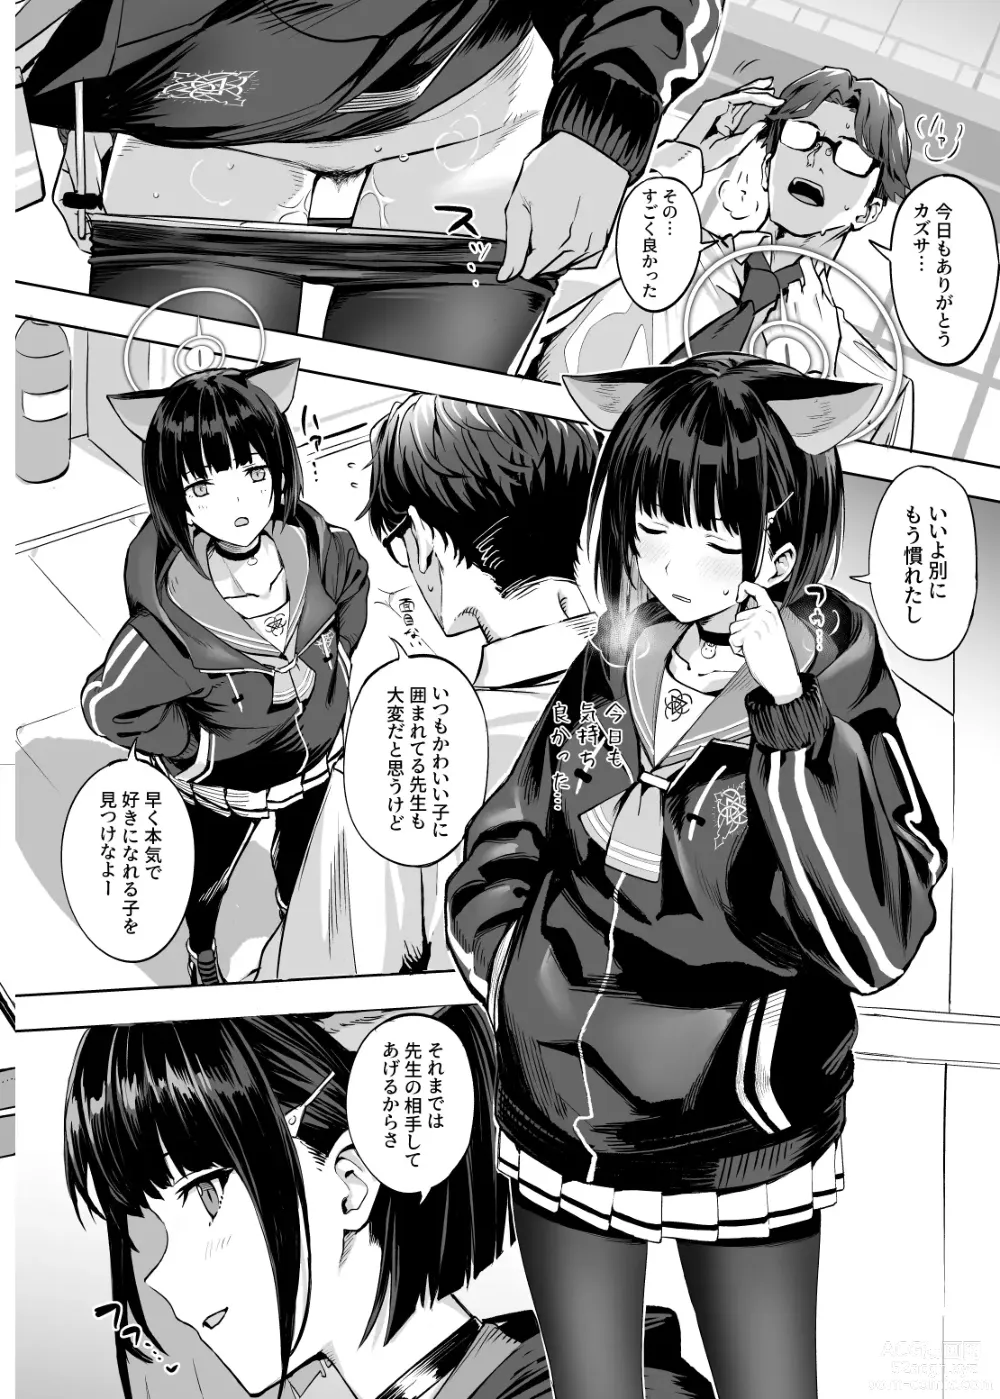 Page 5 of doujinshi Kyouyama Kazusa no Torisetsu - Tetourner le Chat dans la casserole